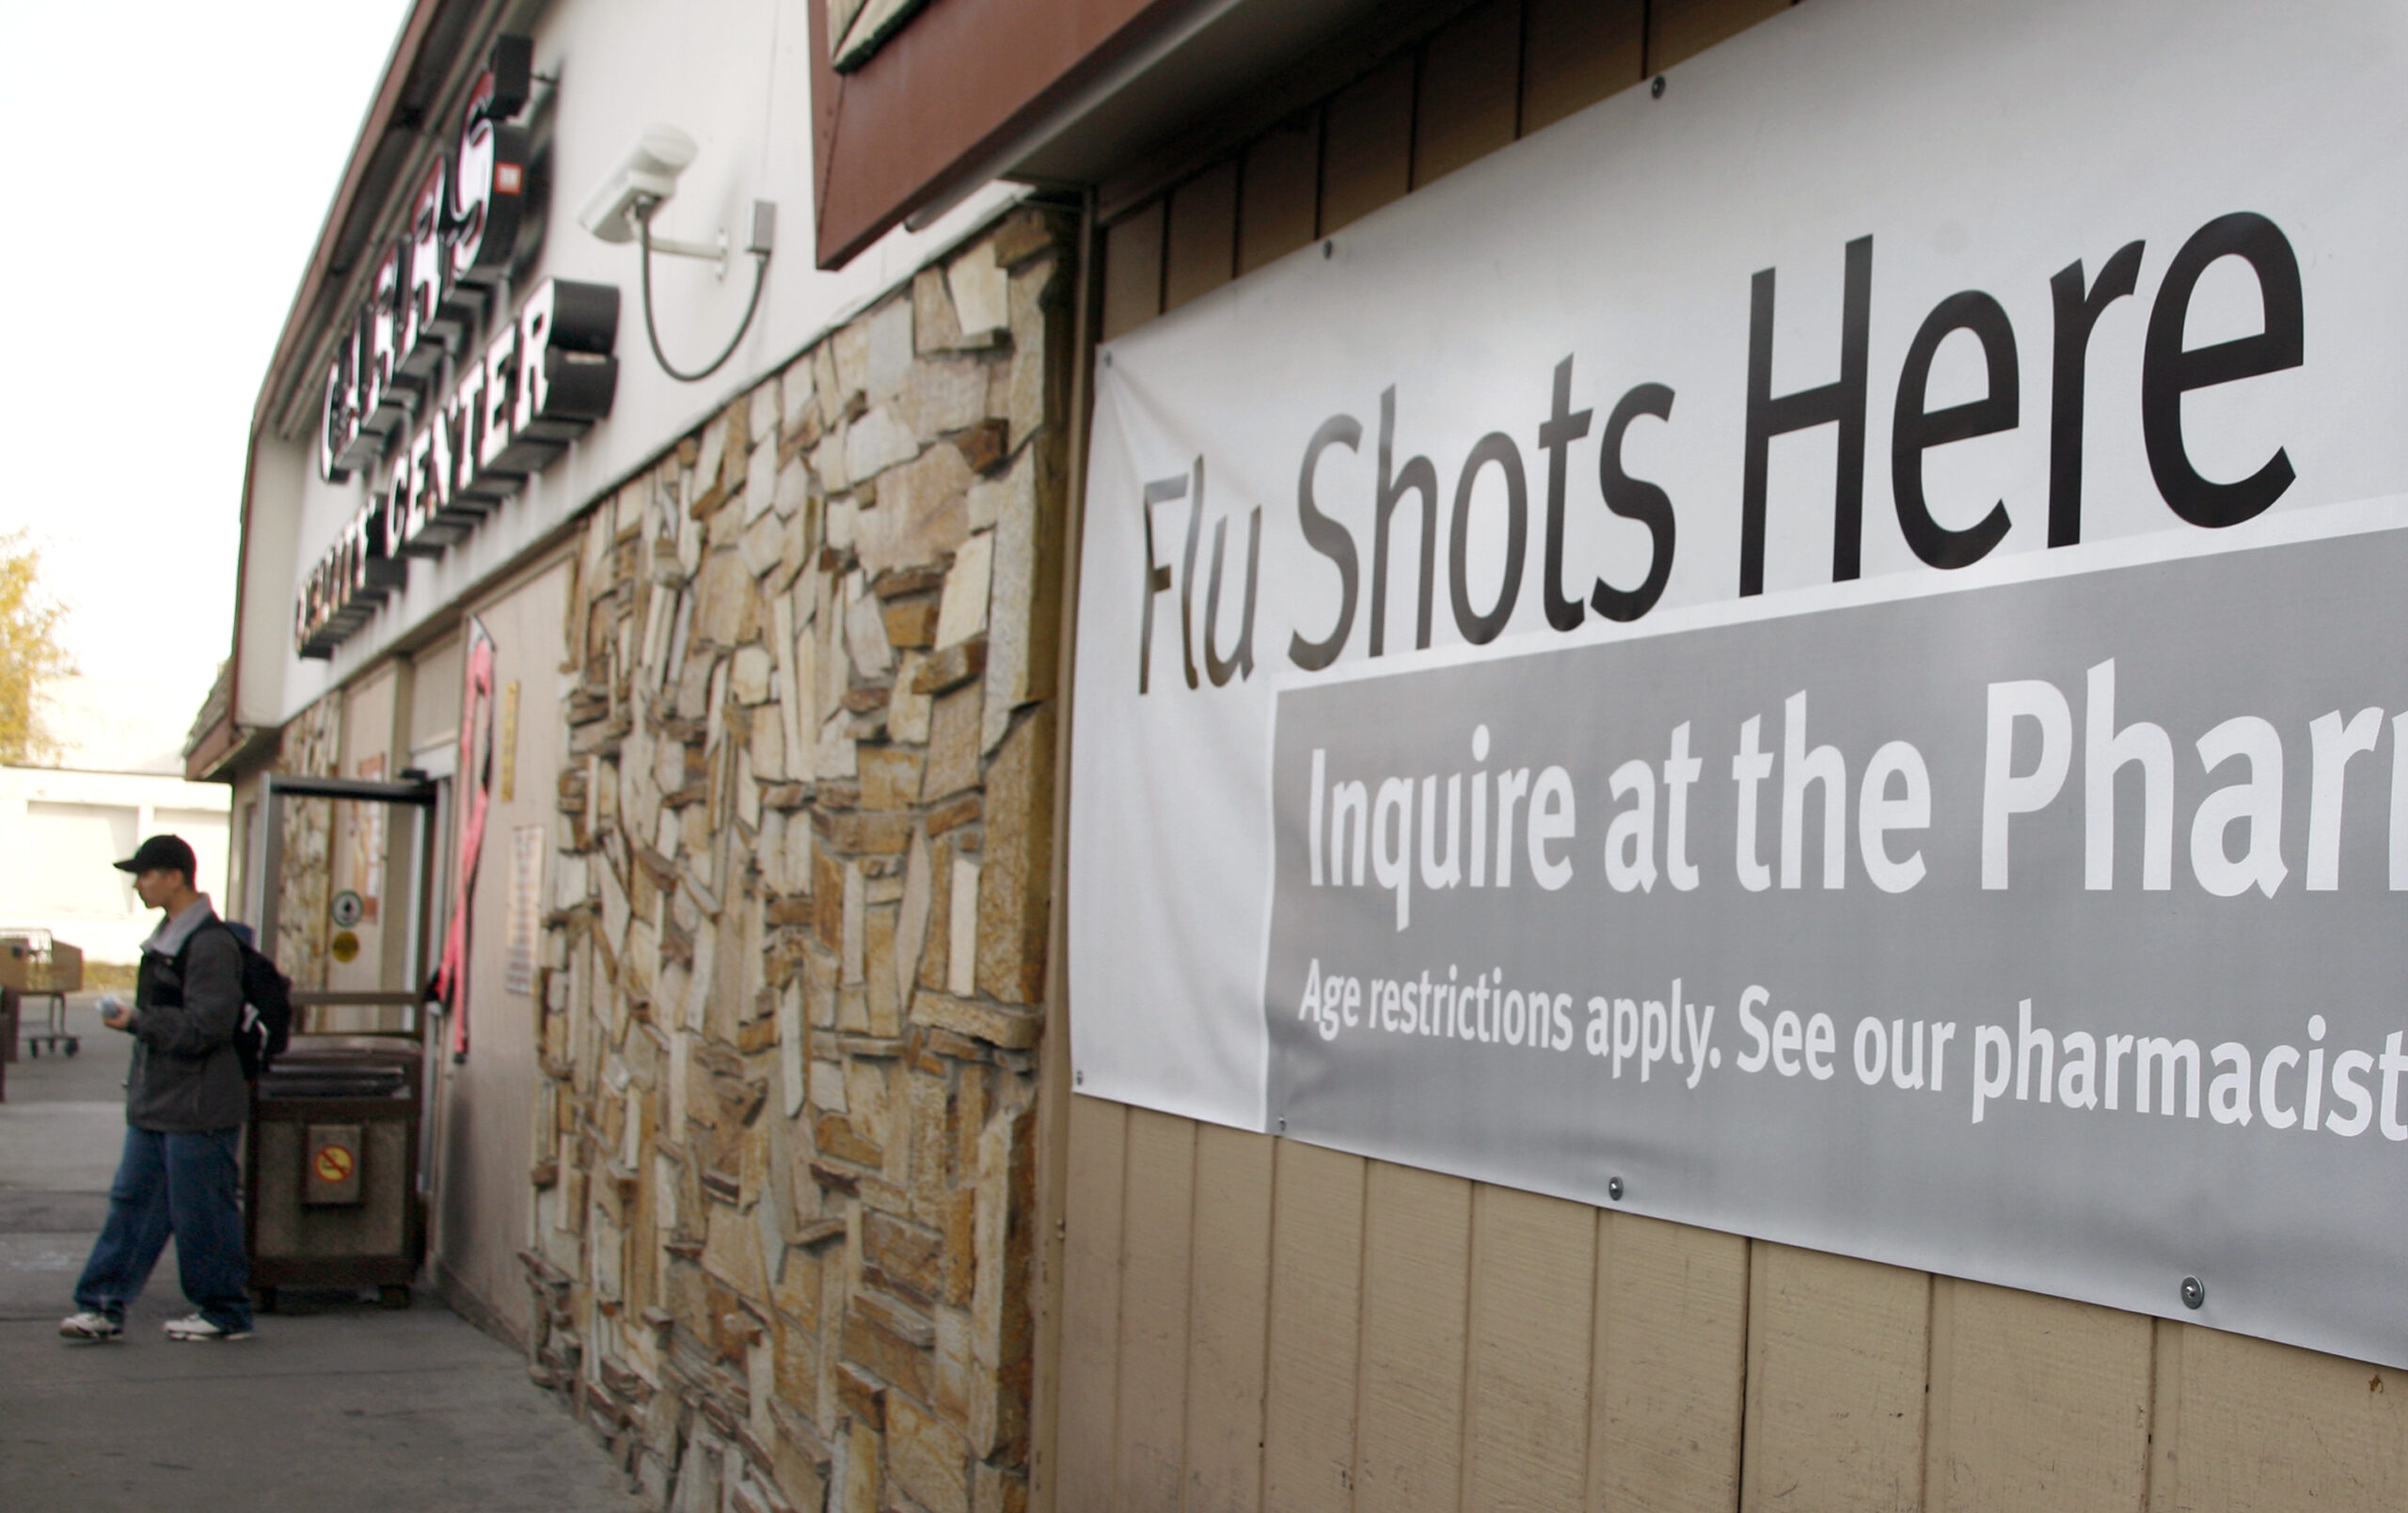 "Flu shots here" sign